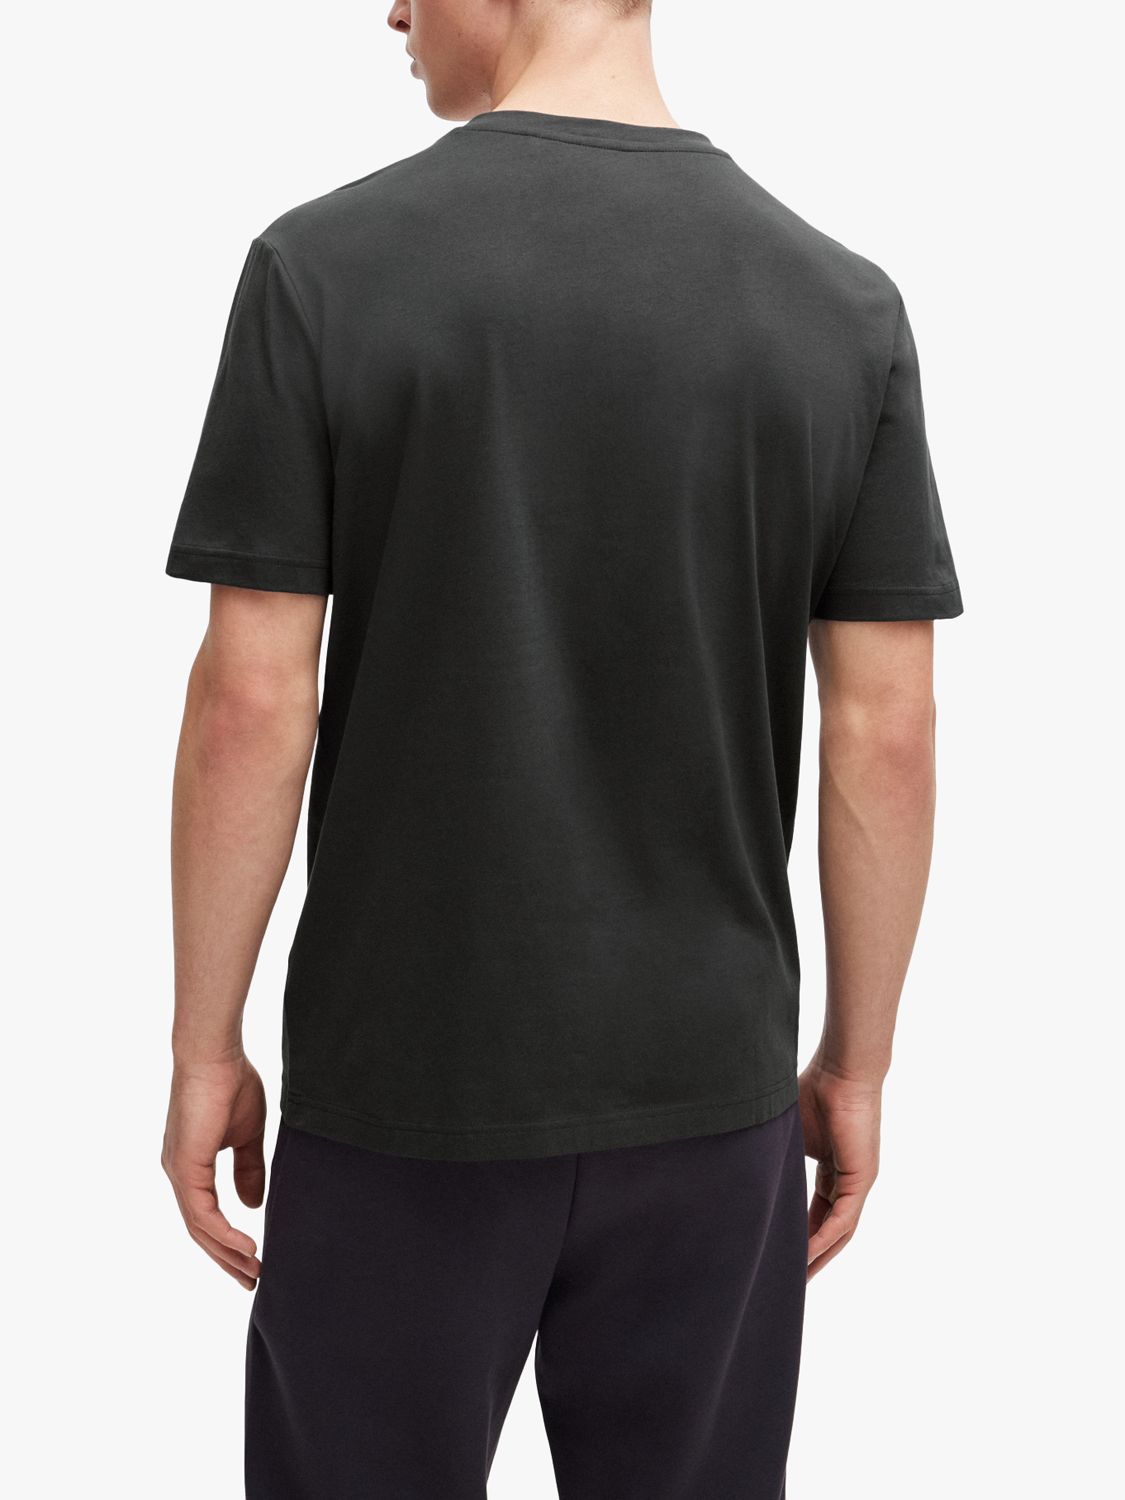 BOSS Large 3D Mesh Logo T-Shirt, Charcoal, XL